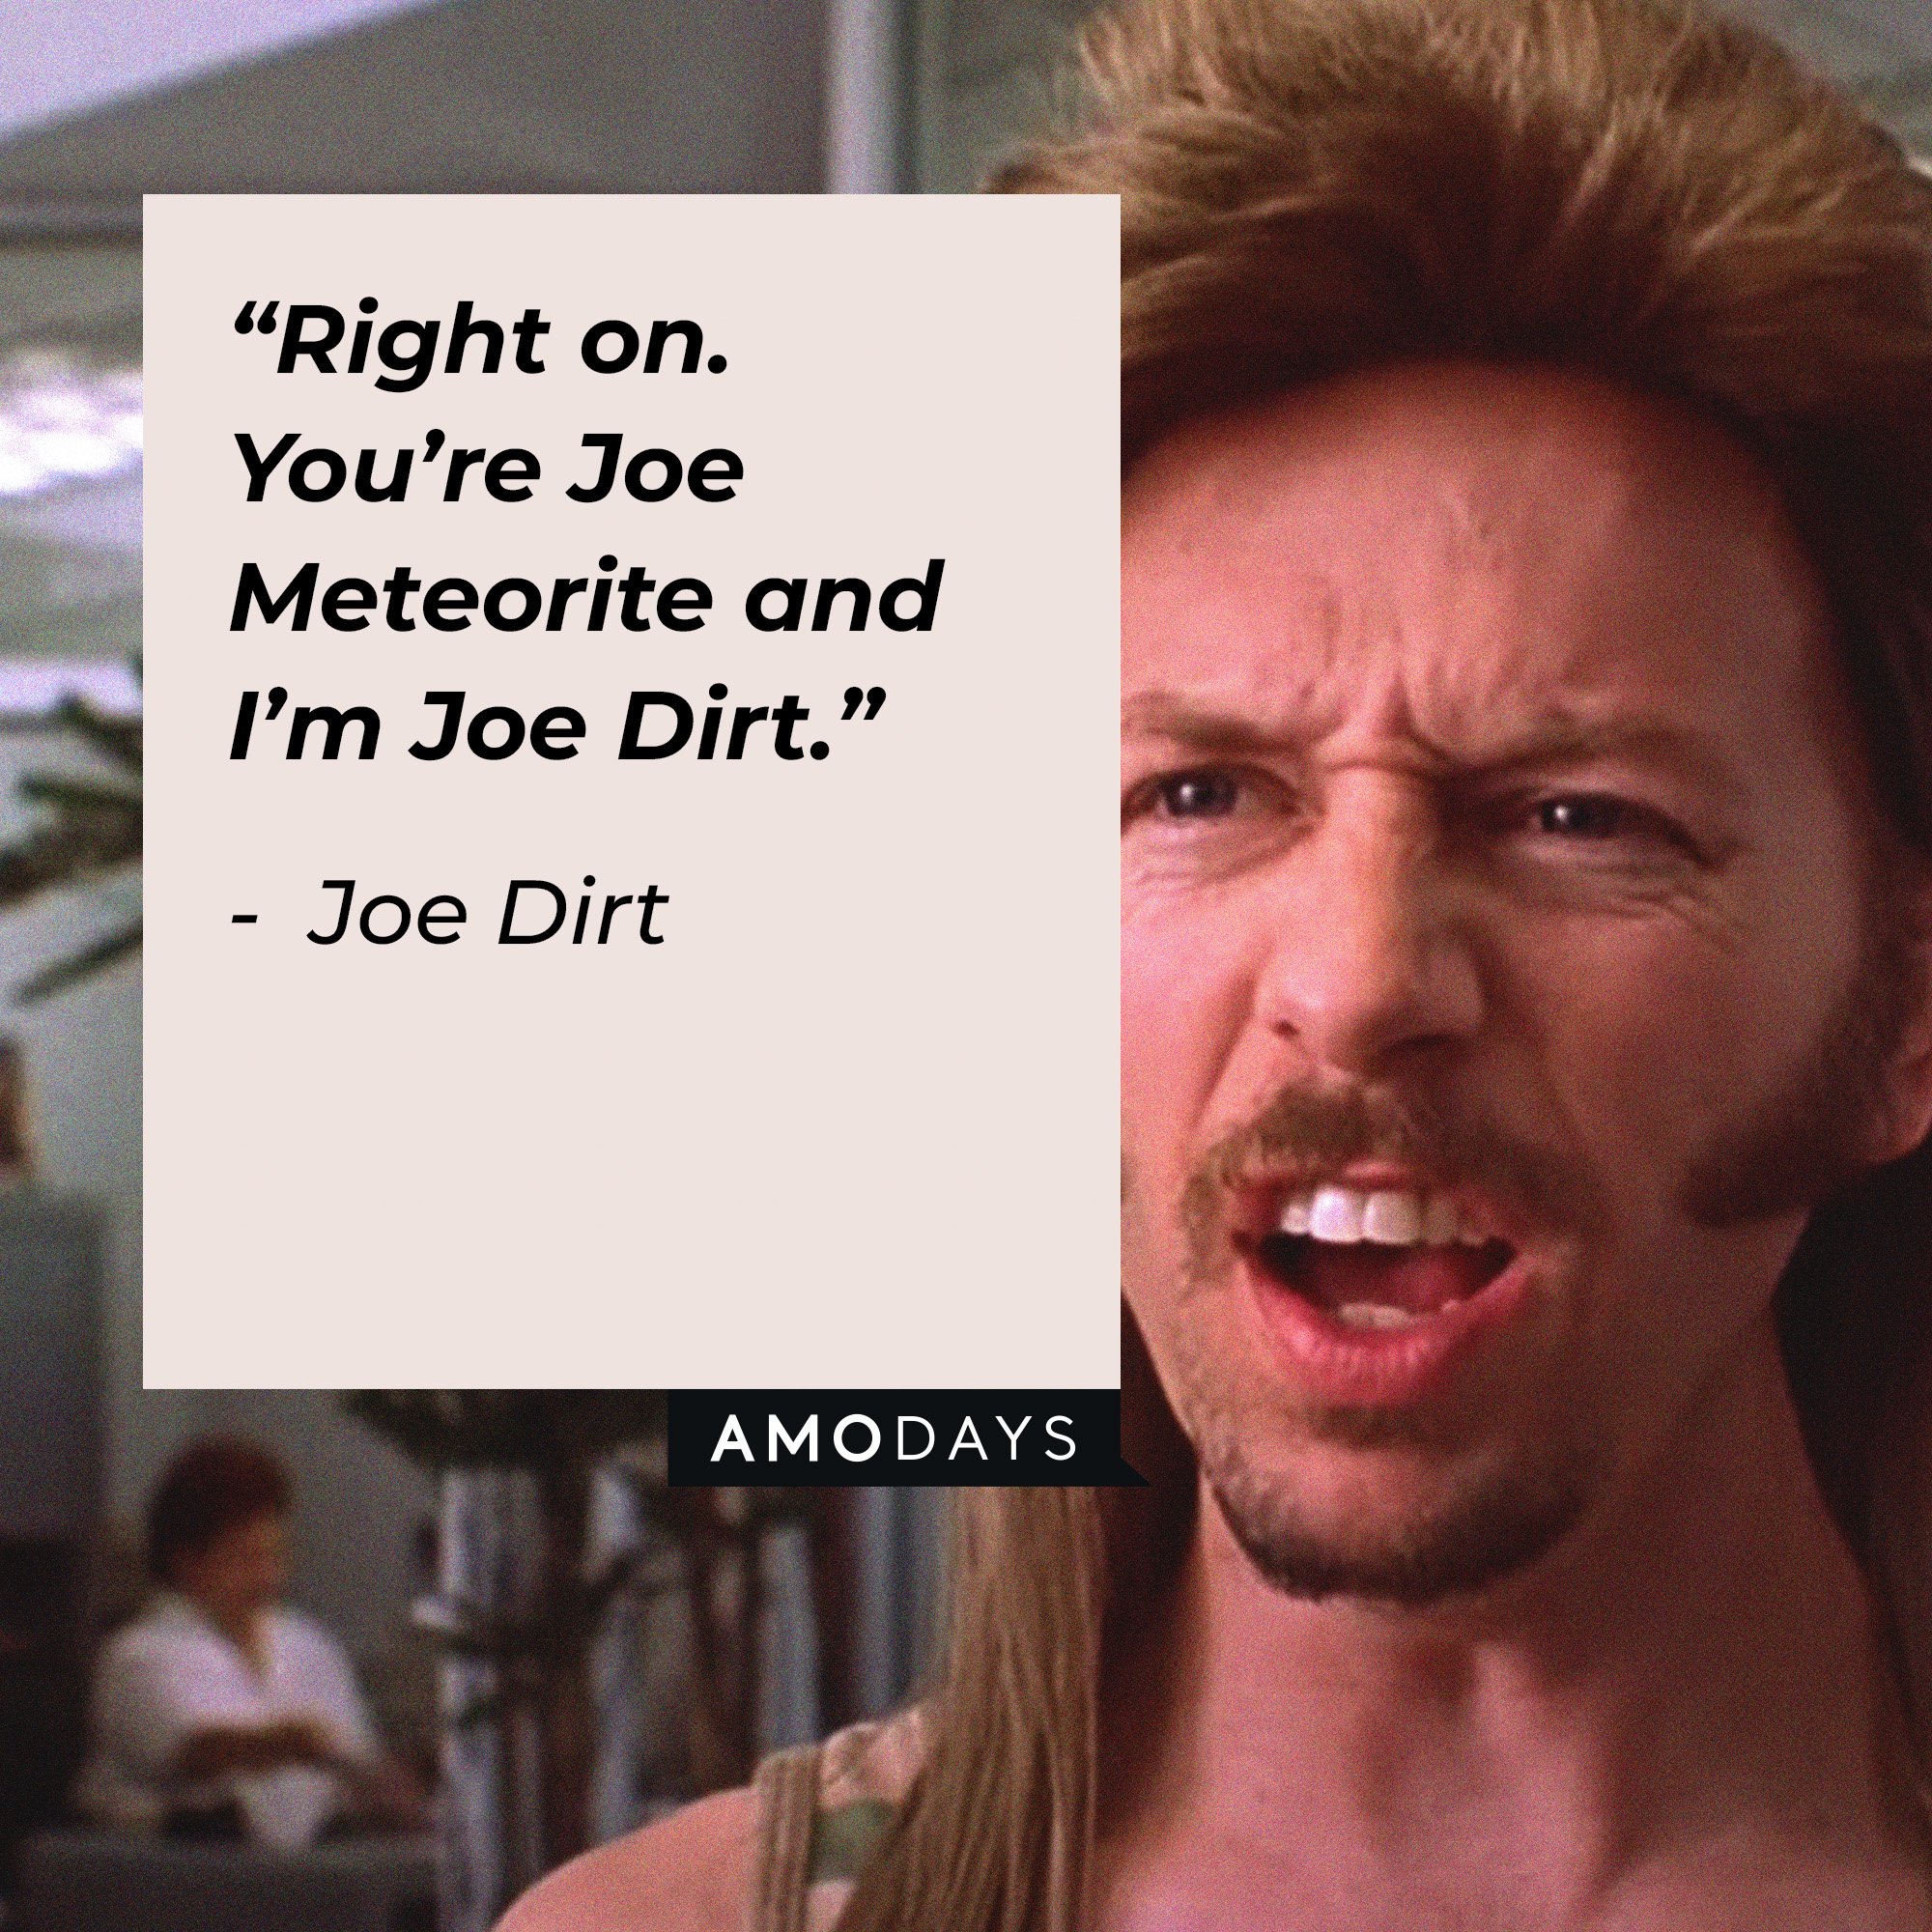 Joe Dirt's quote: “Right on. You’re Joe Meteorite and I’m Joe Dirt.” | Image: AmoDays